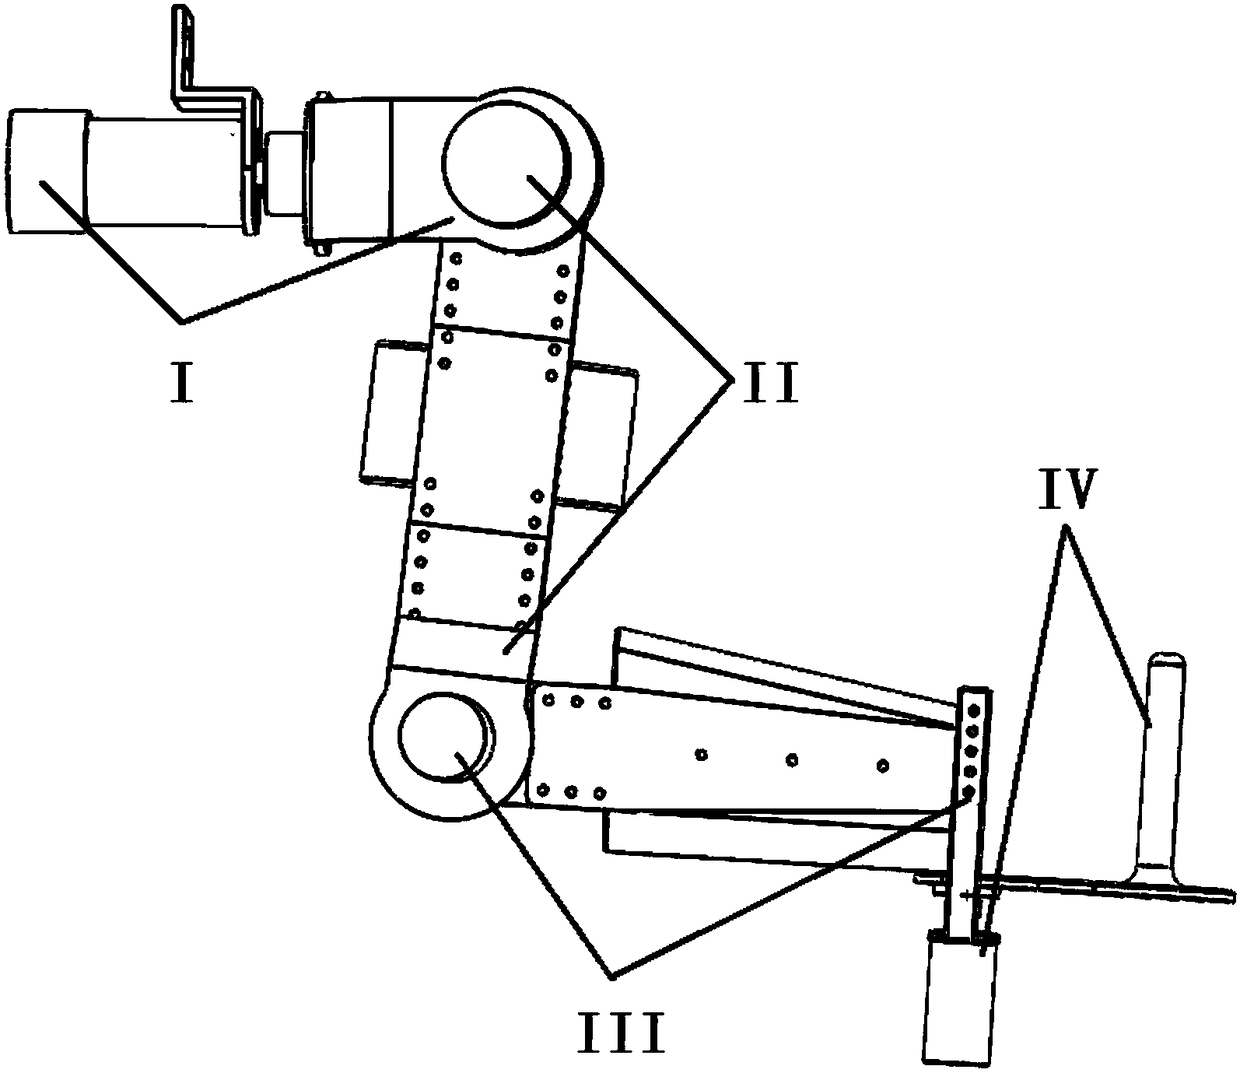 Four-degree-of-freedom rehabilitation mechanical arm device